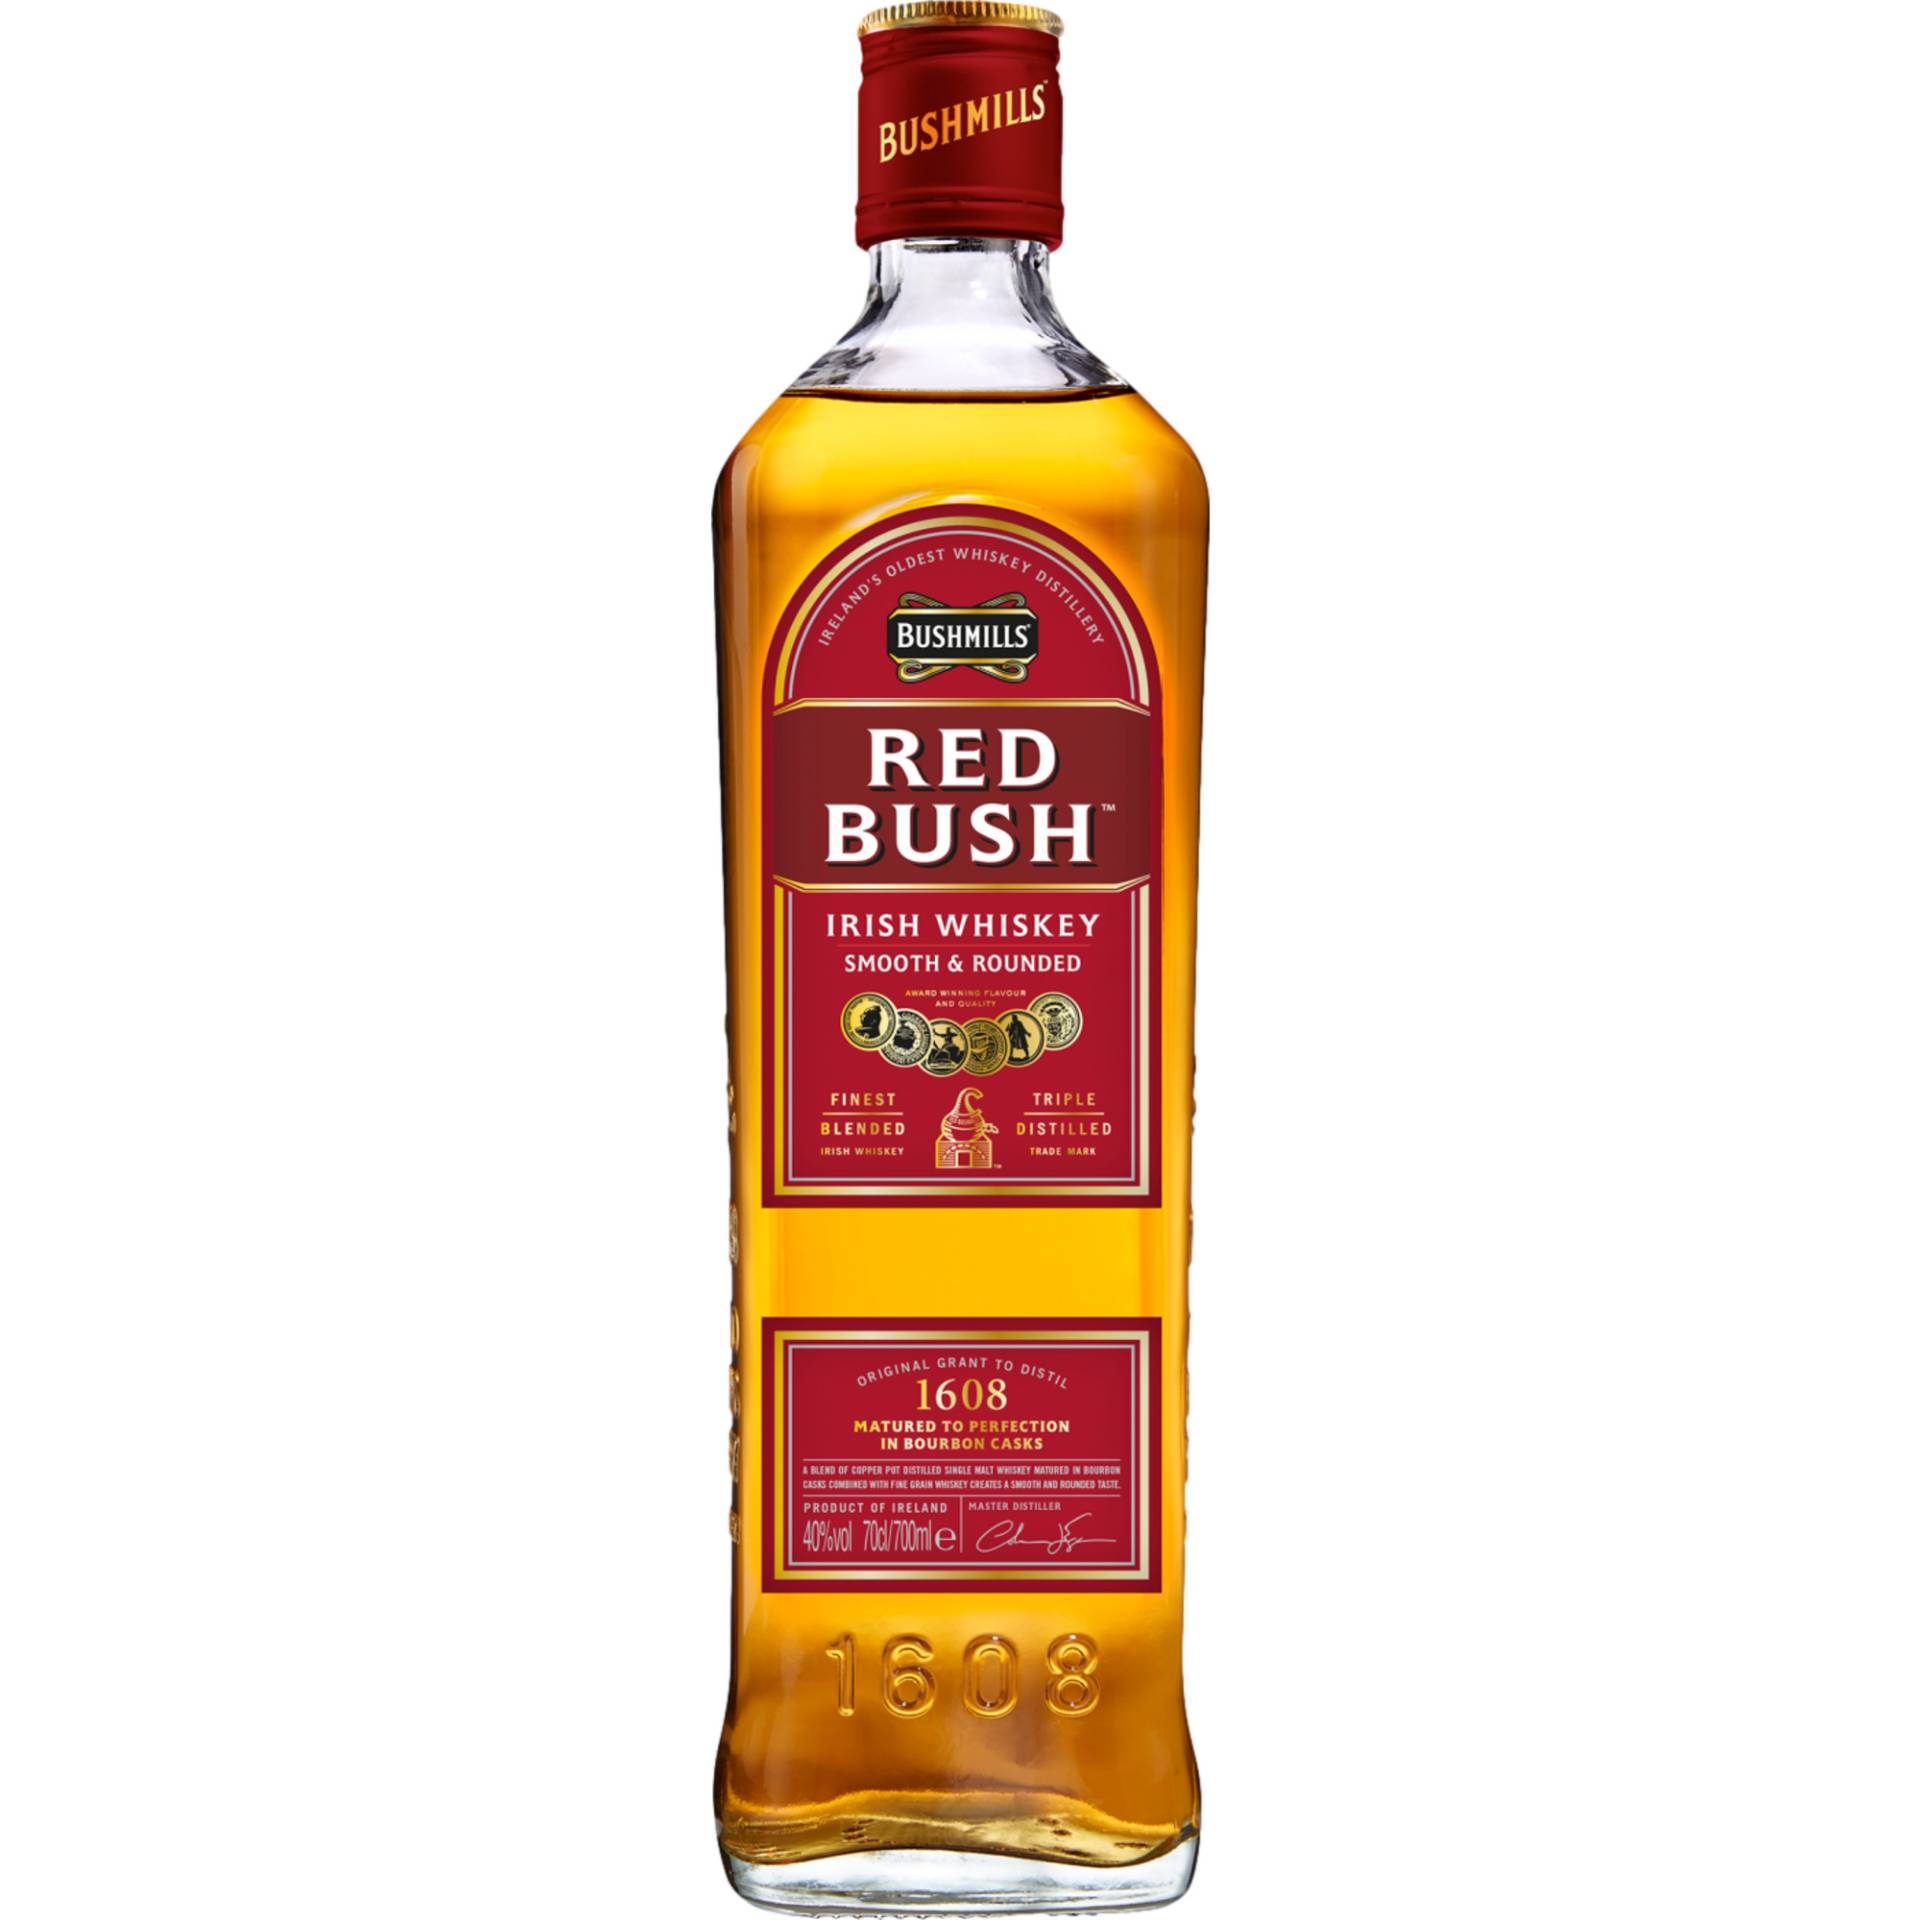 Bushmills Red Bush Whiskey, Irish Whiskey, 0,7 L, 40% Vol., Spirituosen von The "Old Bushmills" Distillery Company Limited